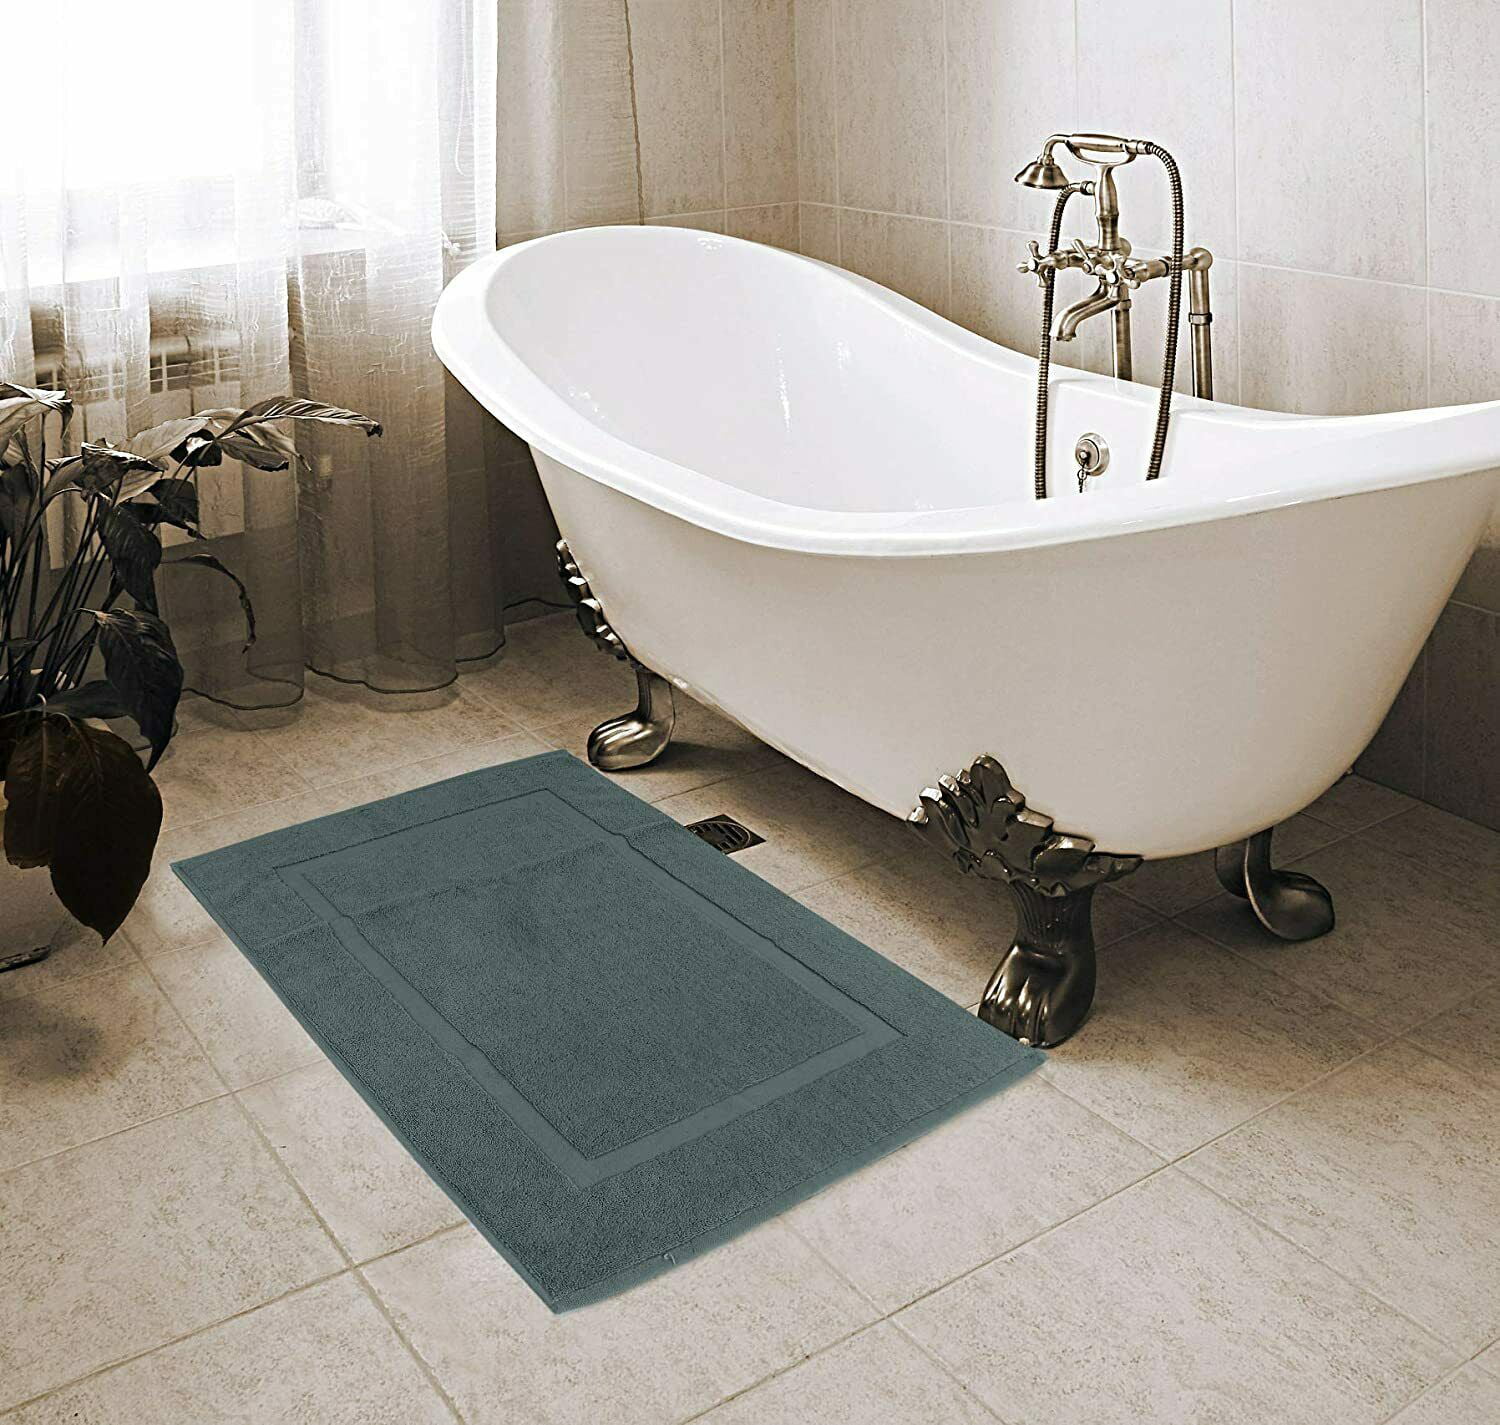 Bath Mat Cotton Washable Contour Rug 21x34 Inch Tub Mat 2 Pack by Utopia Towels 